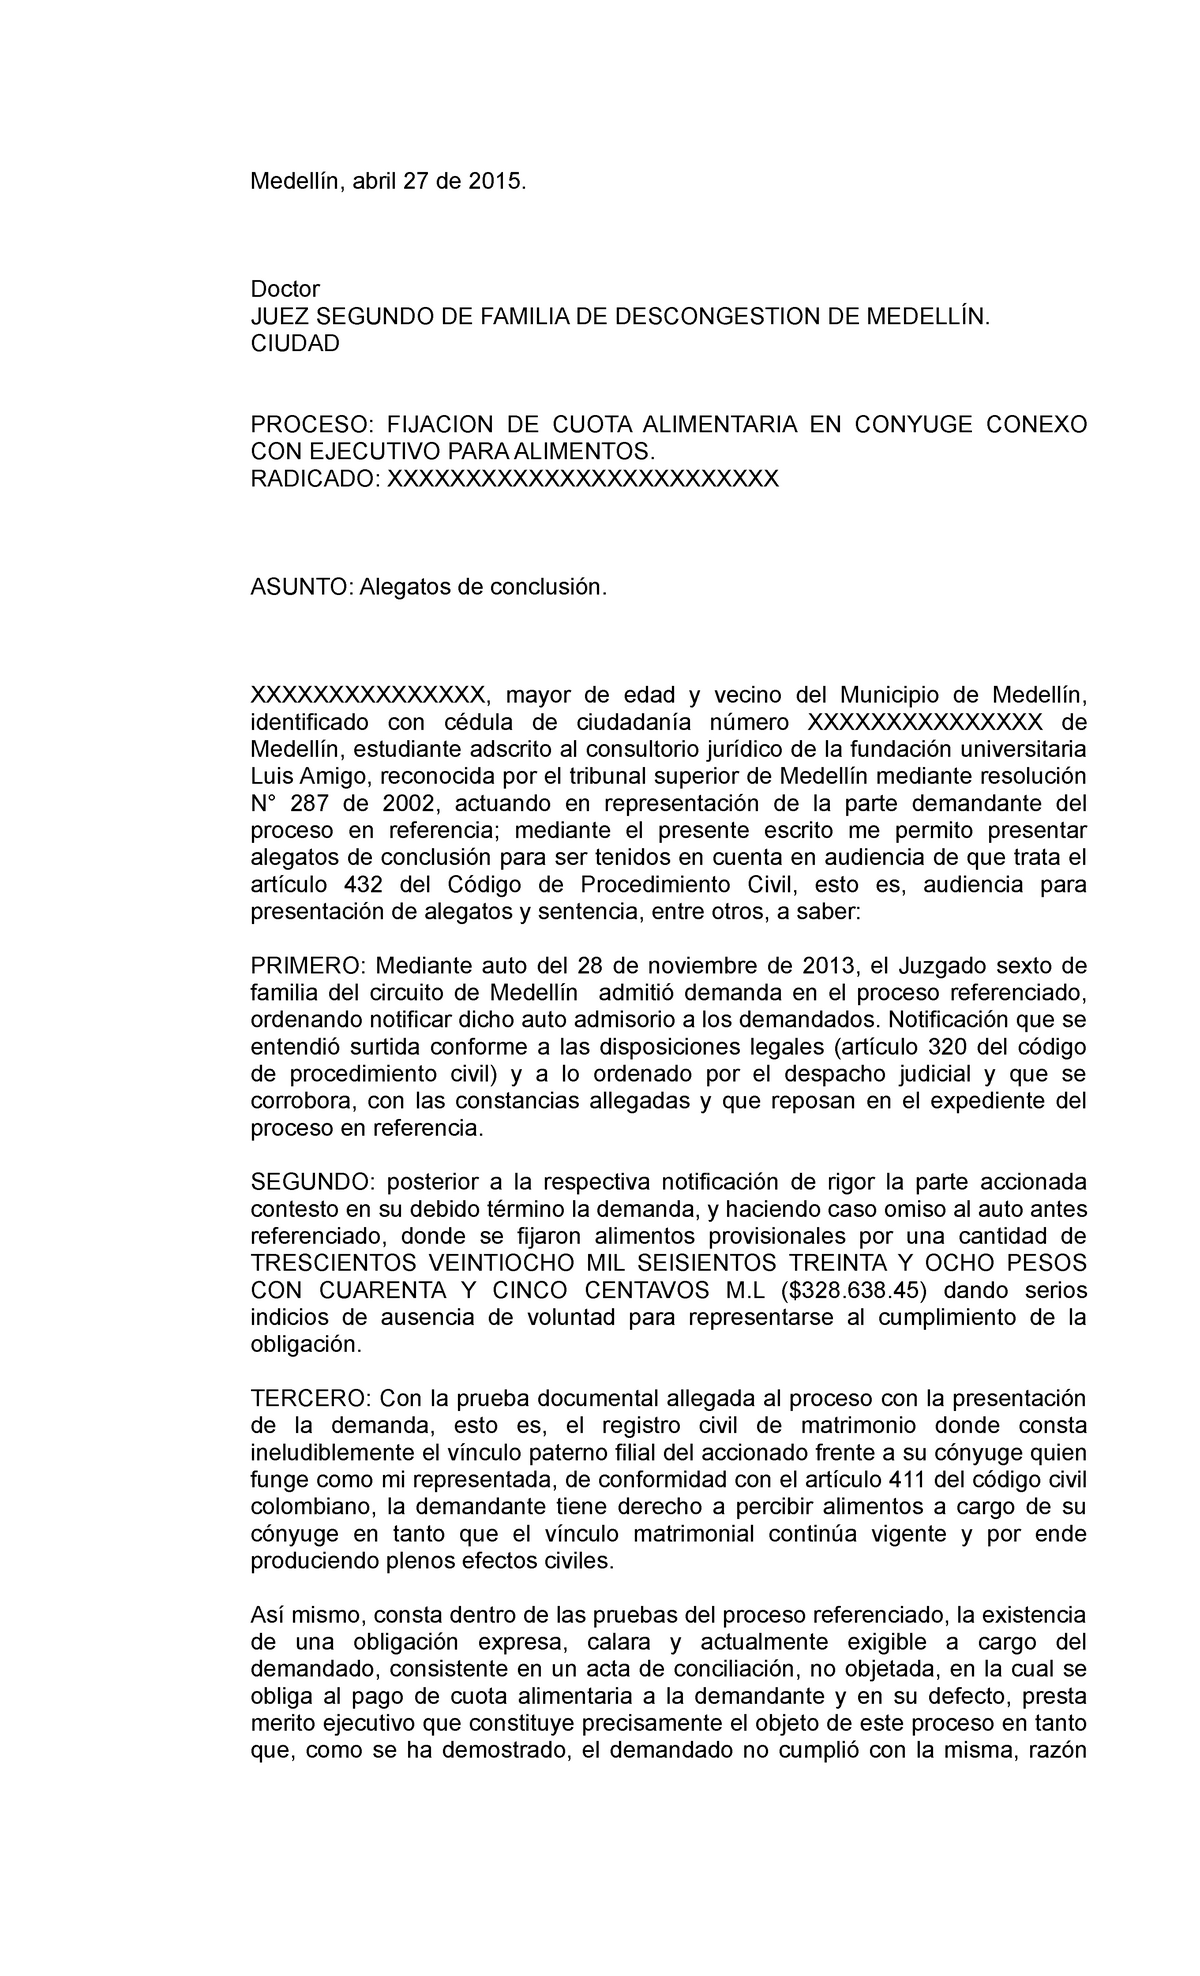 70 Modelo DE Alegatos DE Conclusion - Medellín, abril 27 de 2015 ...